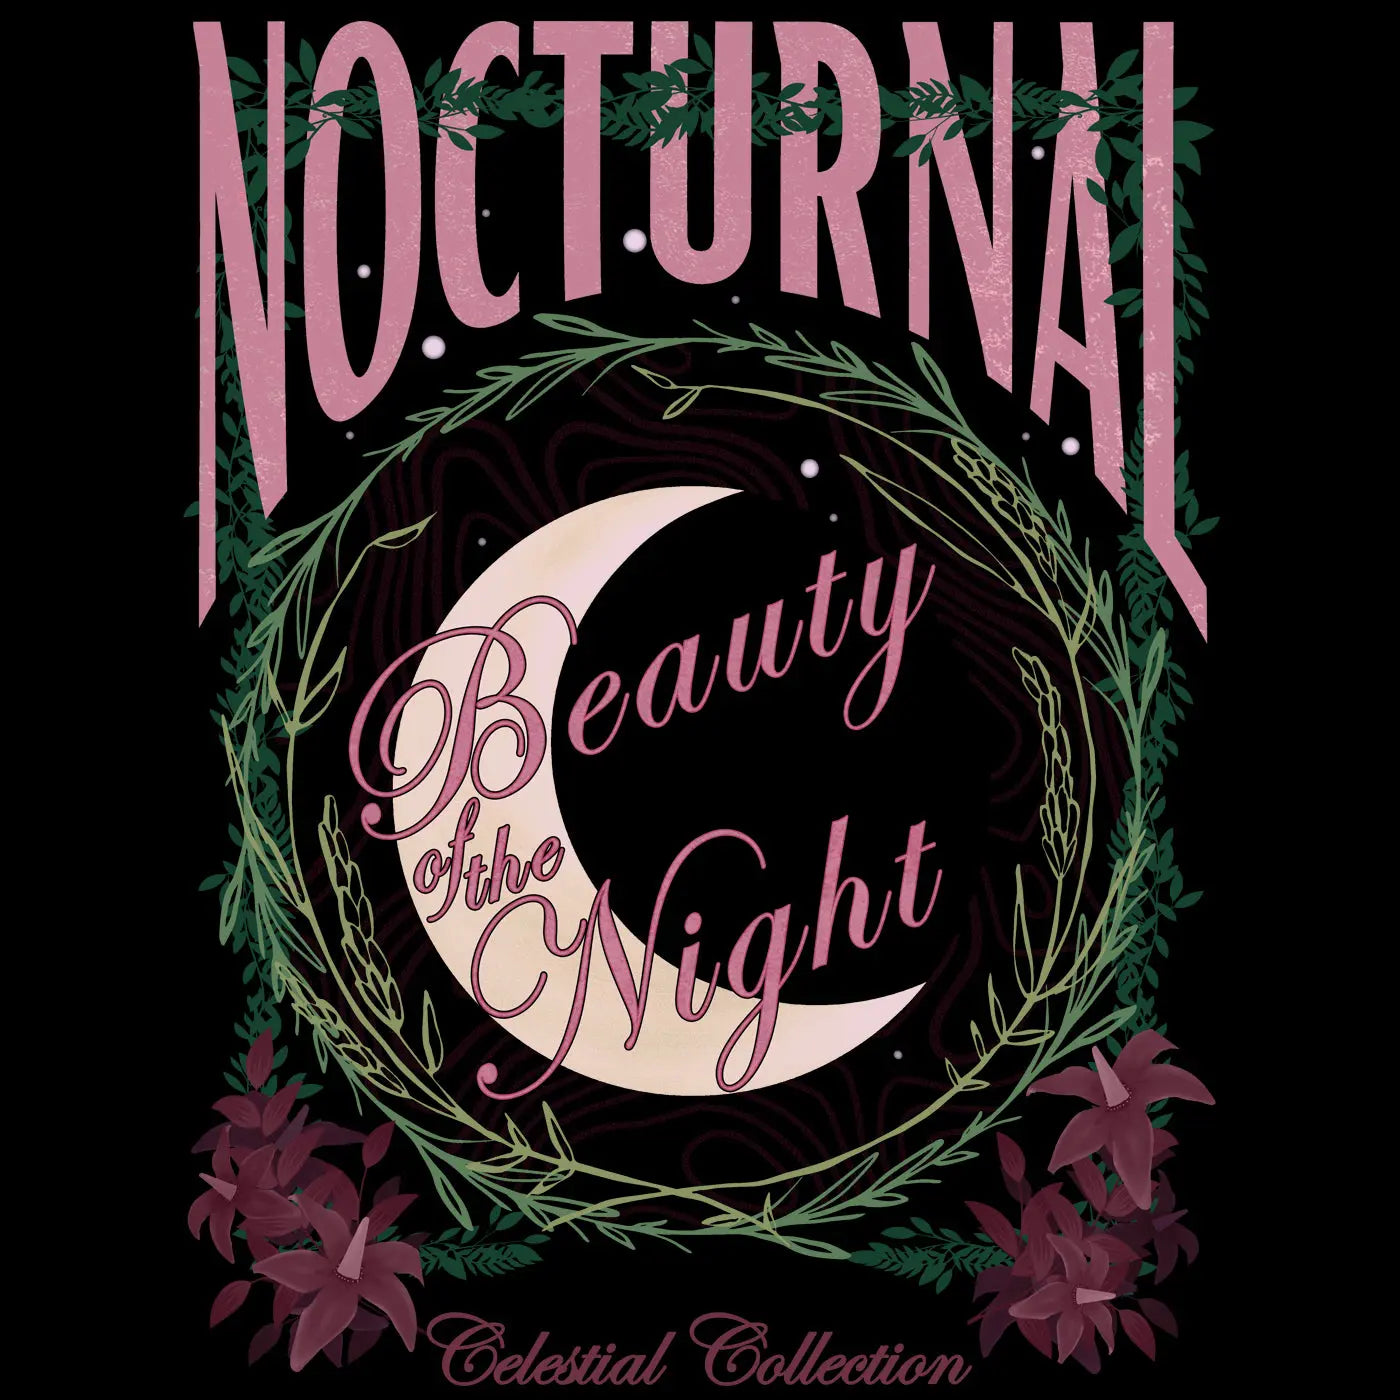 Nocturnal-Color - BC Ink Works